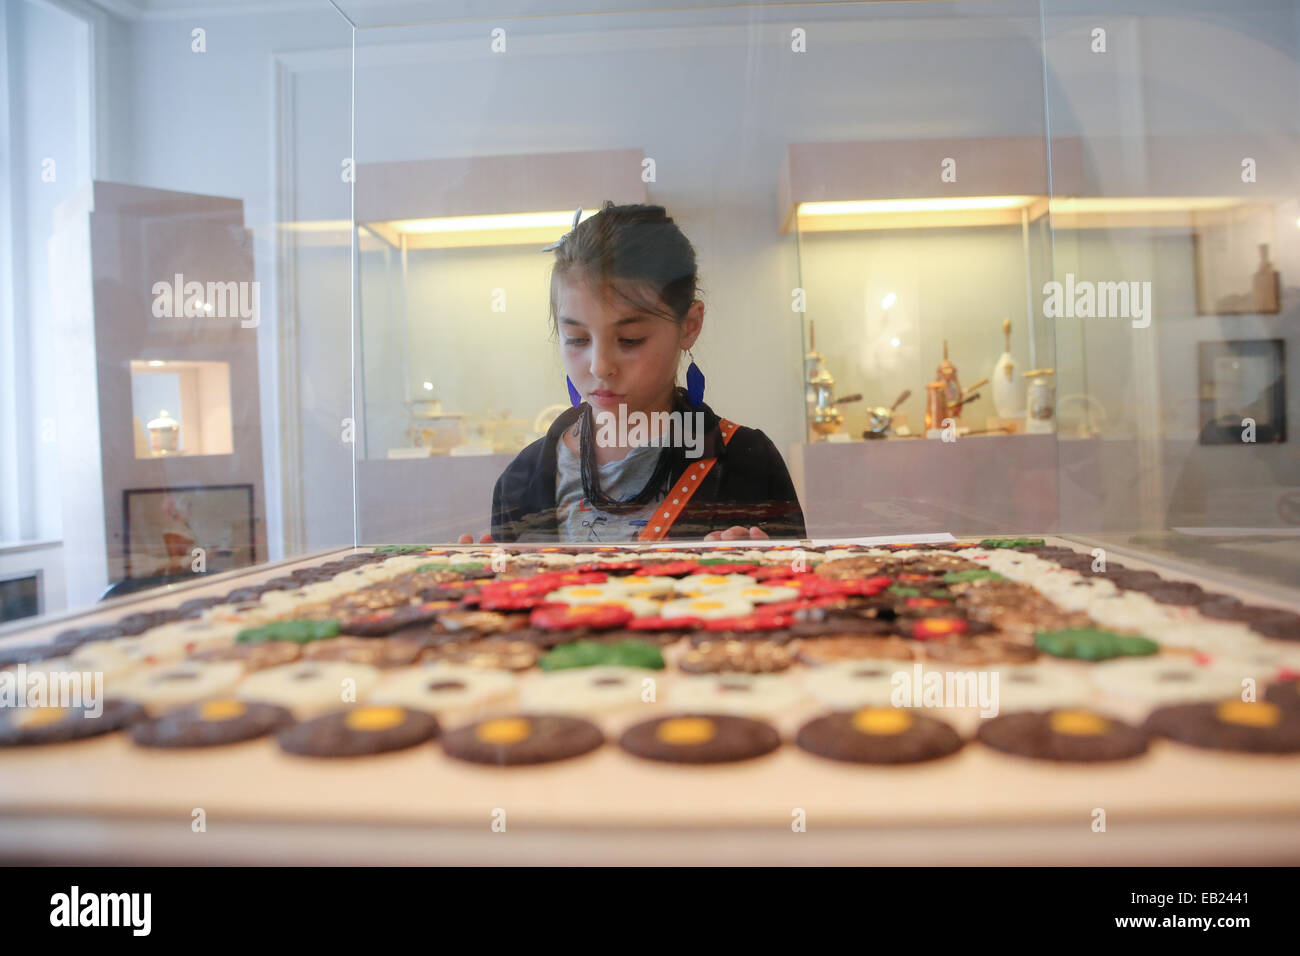 young girl kid looking chocolate display europe Stock Photo